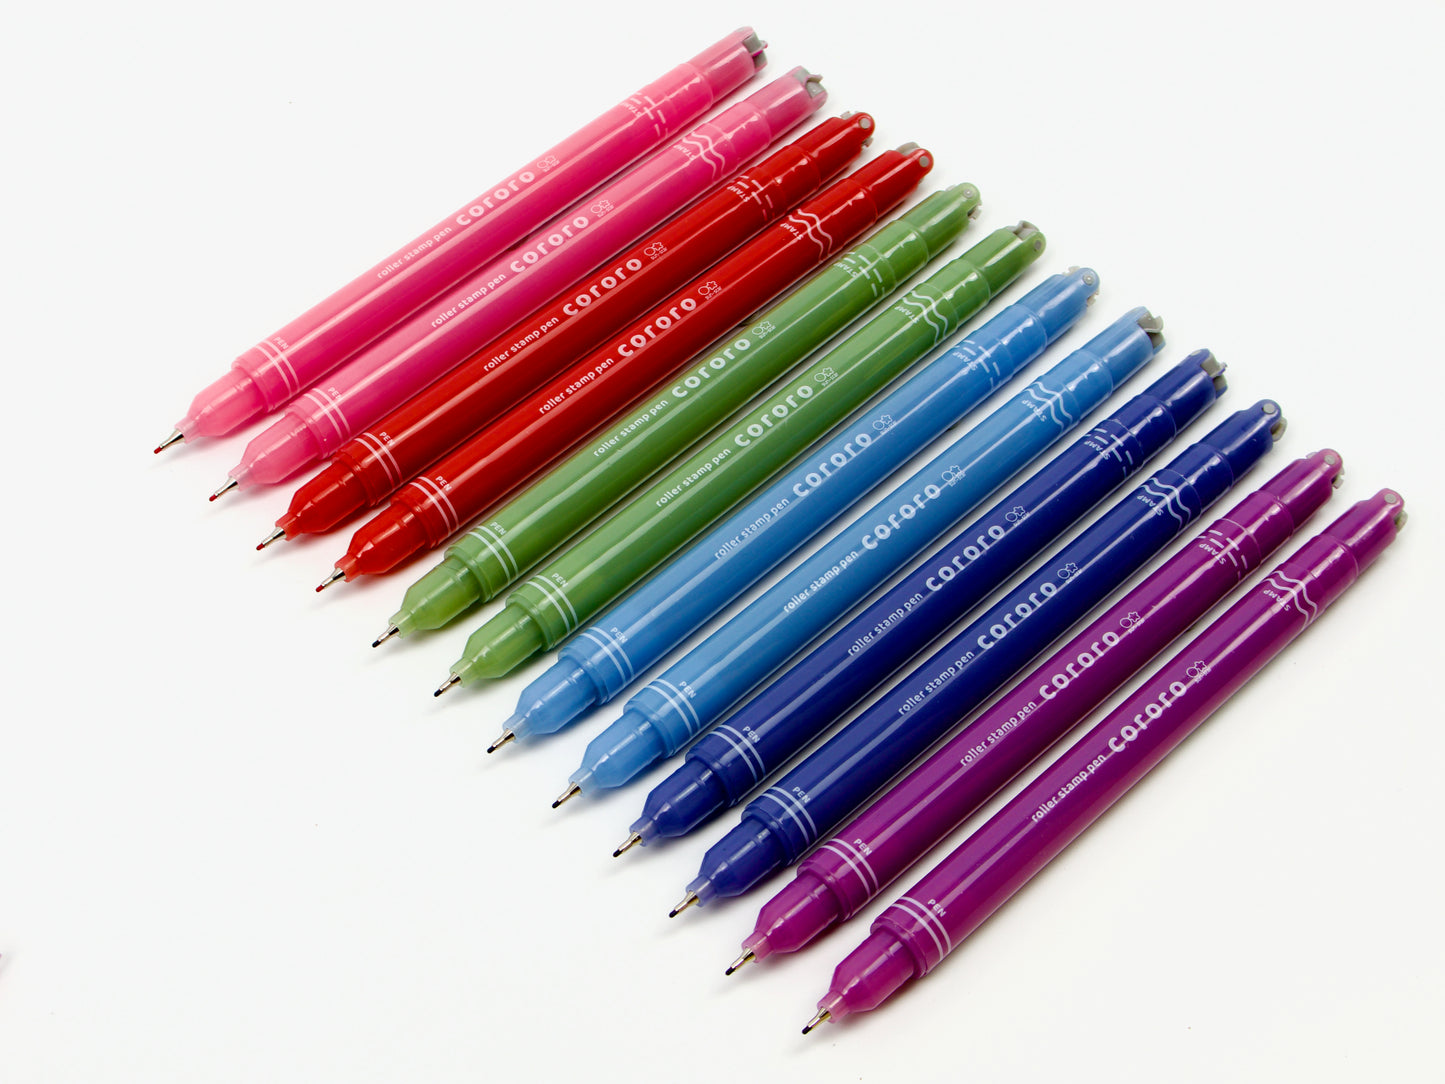 Cororo Roller Stamp Pen